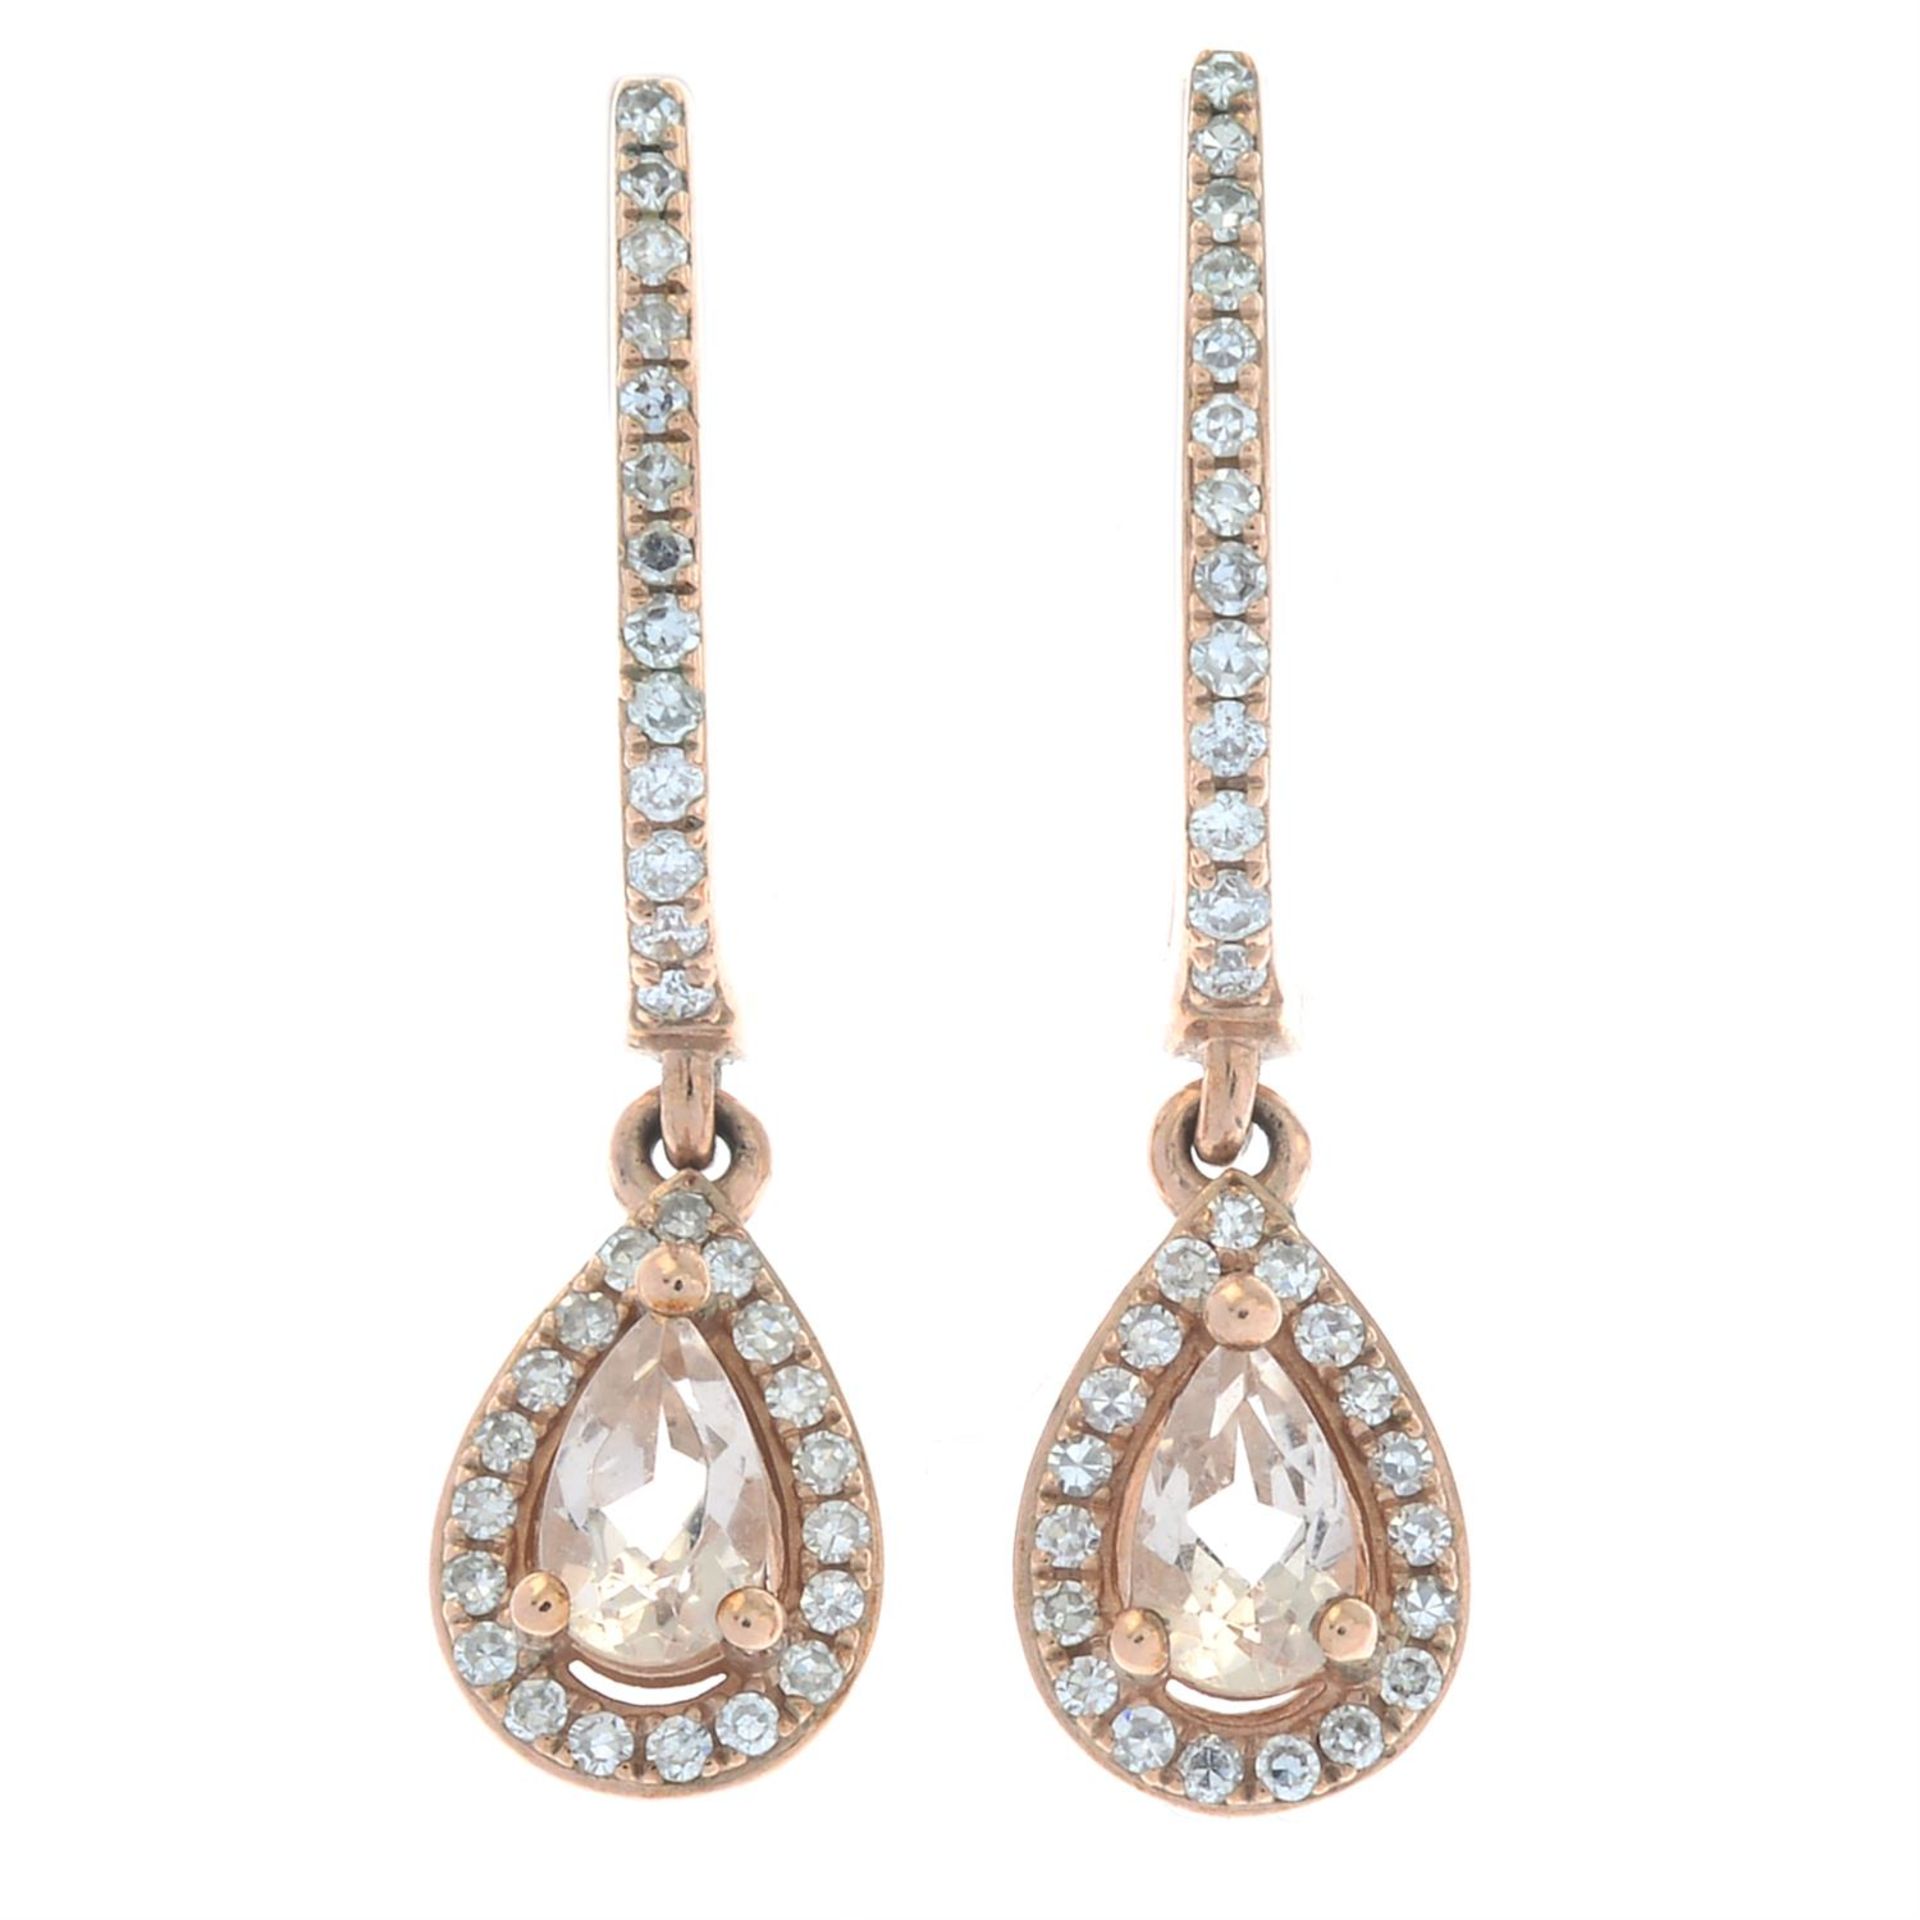 A pair of 9ct gold morganite and diamond drop earrings.